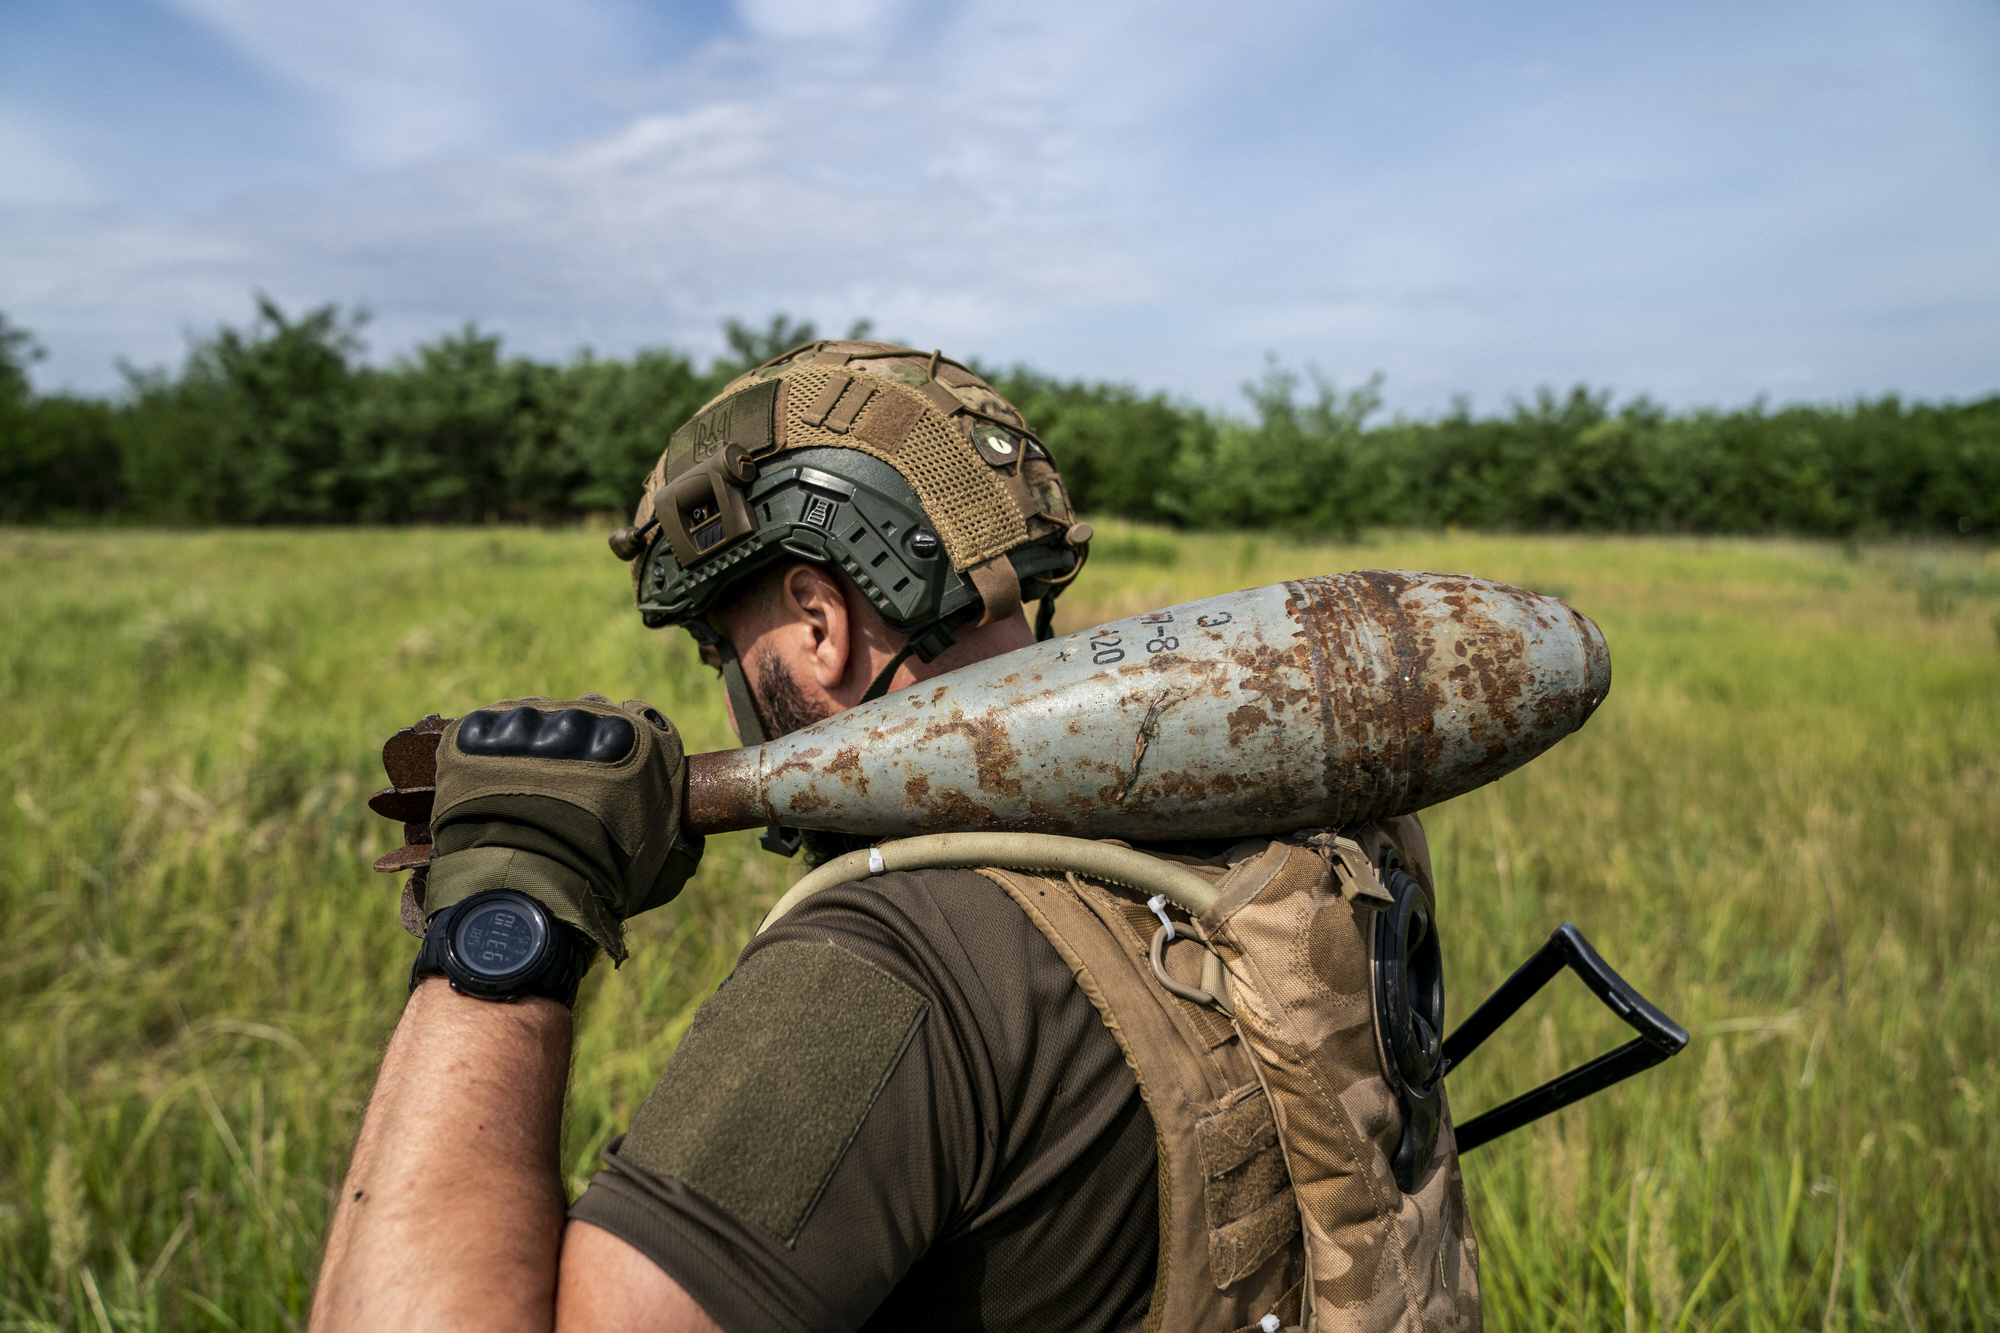 Ukrainian soldier carrying ammunition, illustrative image. Photo via Eastnews.ua.